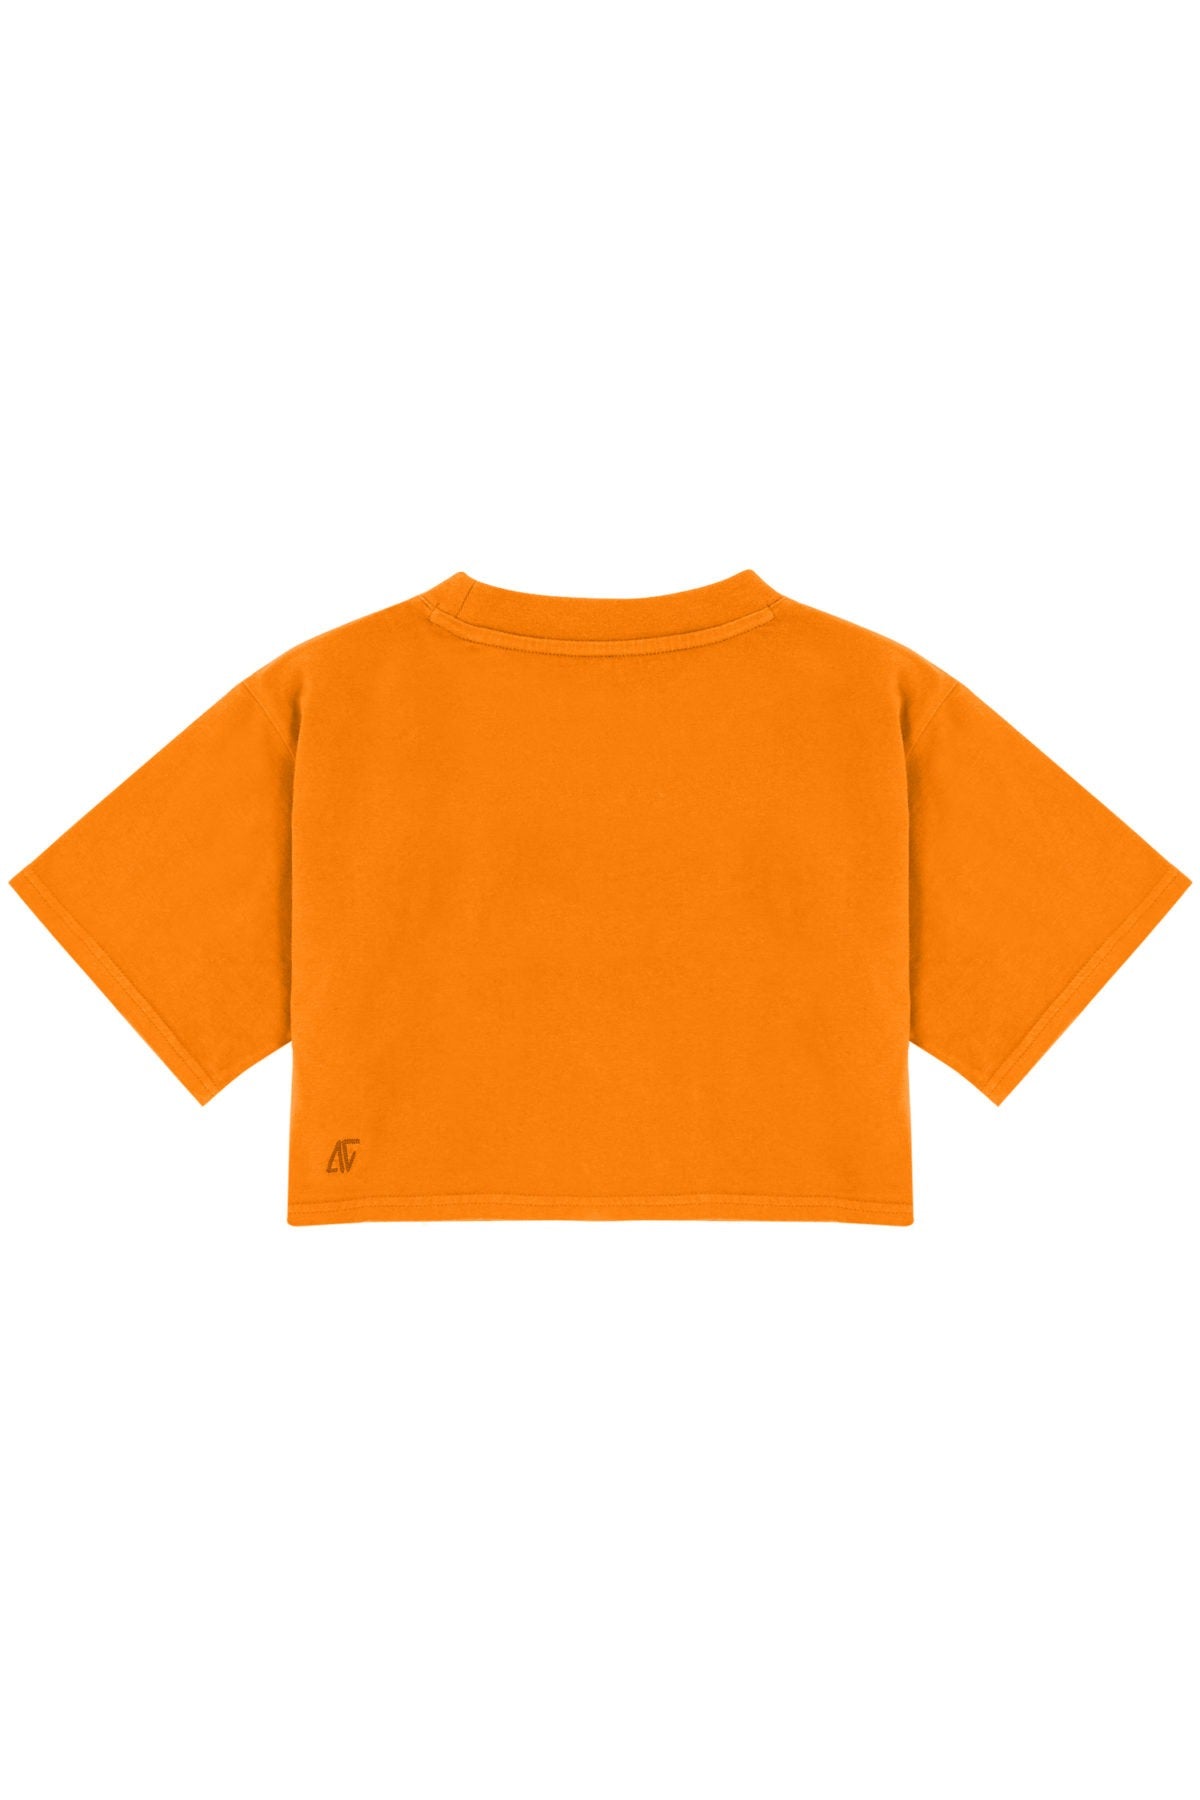 Load image into Gallery viewer, High Density Crop T-shirt - Persimman Orange
